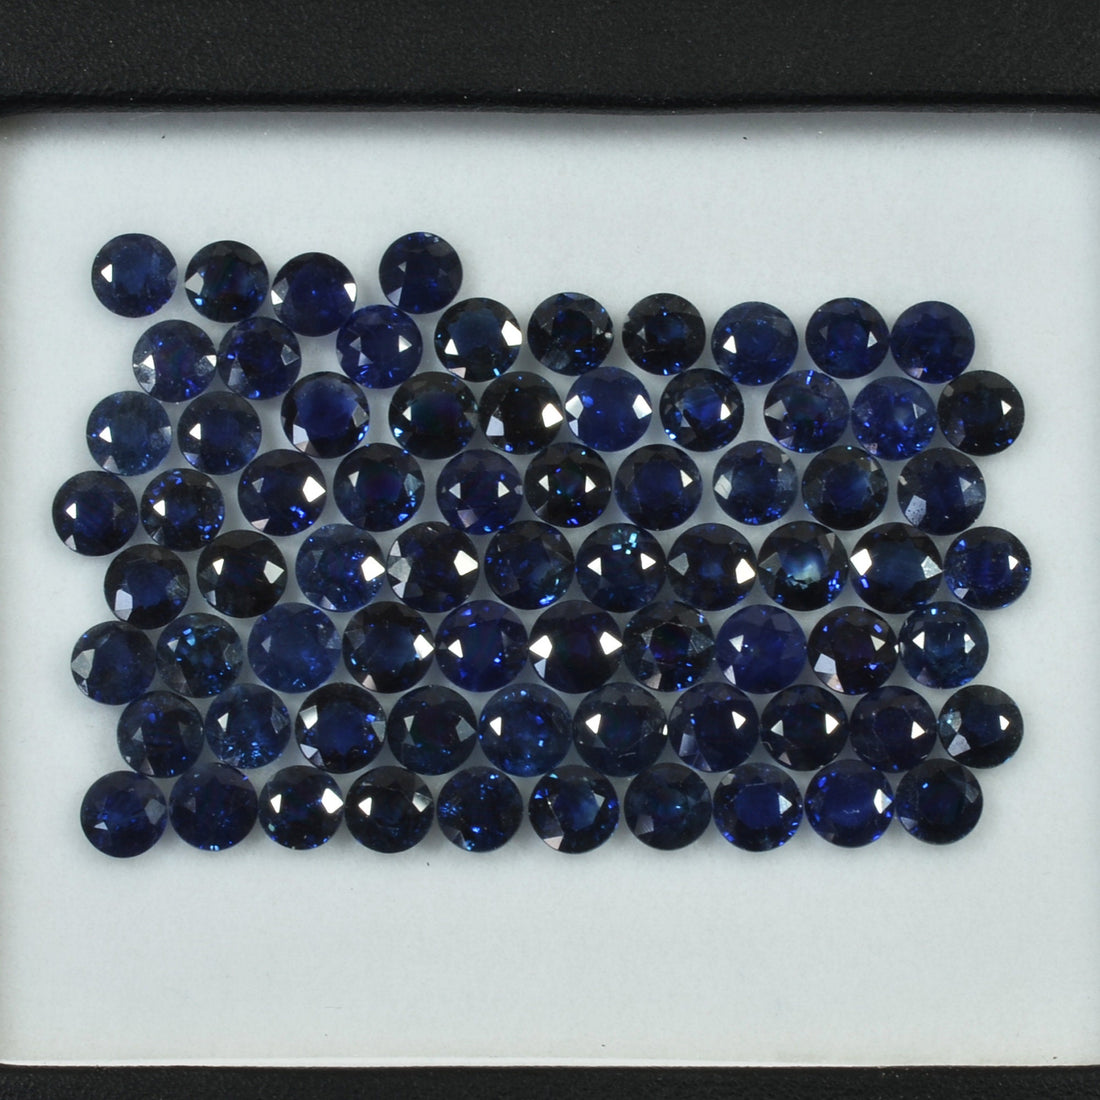 4.2-5.3 MM Natural Blue Sapphire Loose Gemstone Round Cut